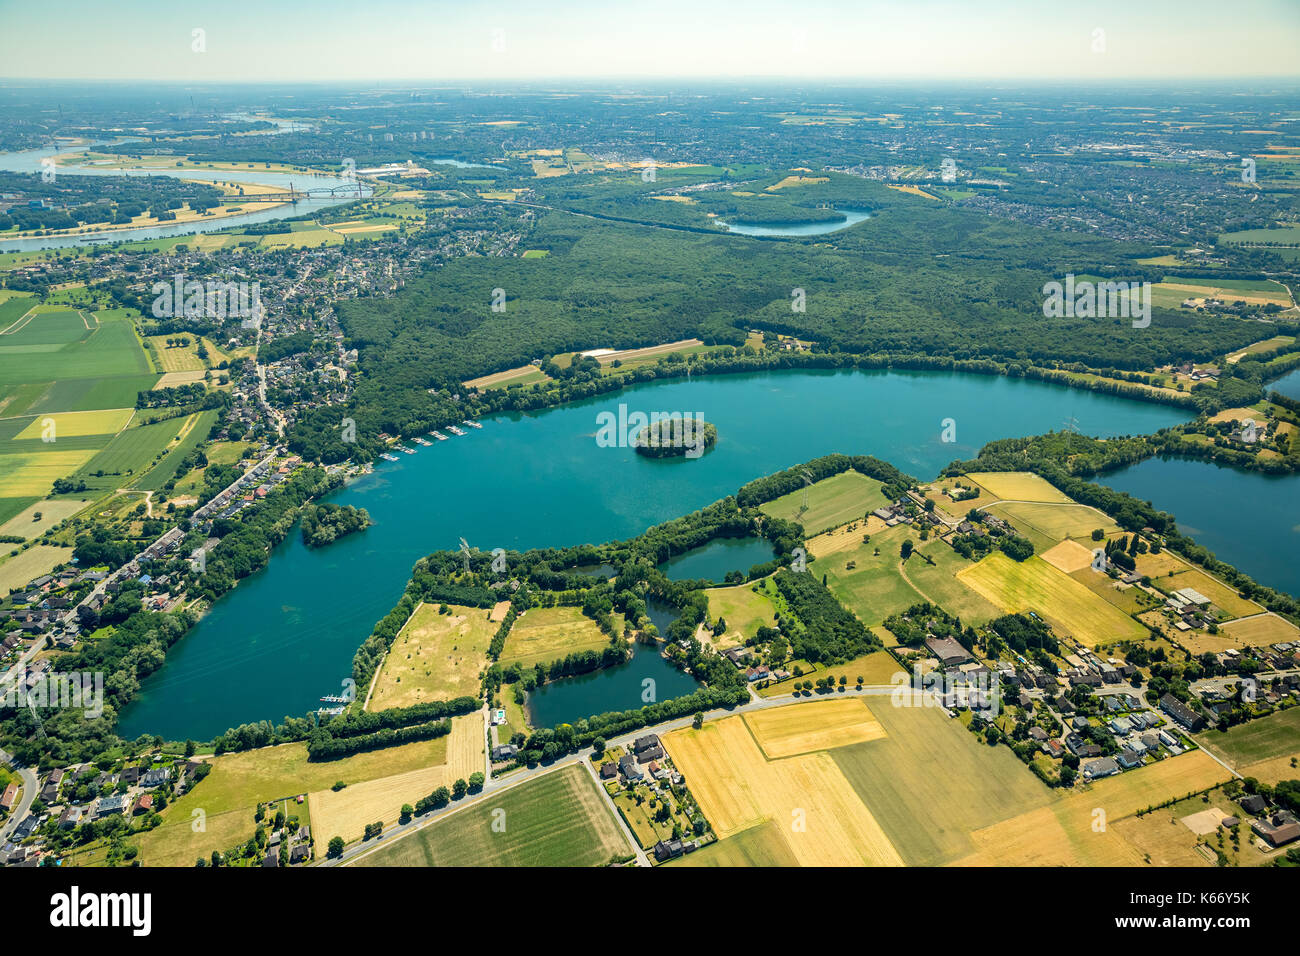 Lohheide lake, sailors Community Lohheider Lake e.V., Baerl, Rheinberg, Ruhr, Nordrhein-Westfalen, Germany, Europe, Aerial View, Aerial, aerial photog Stock Photo